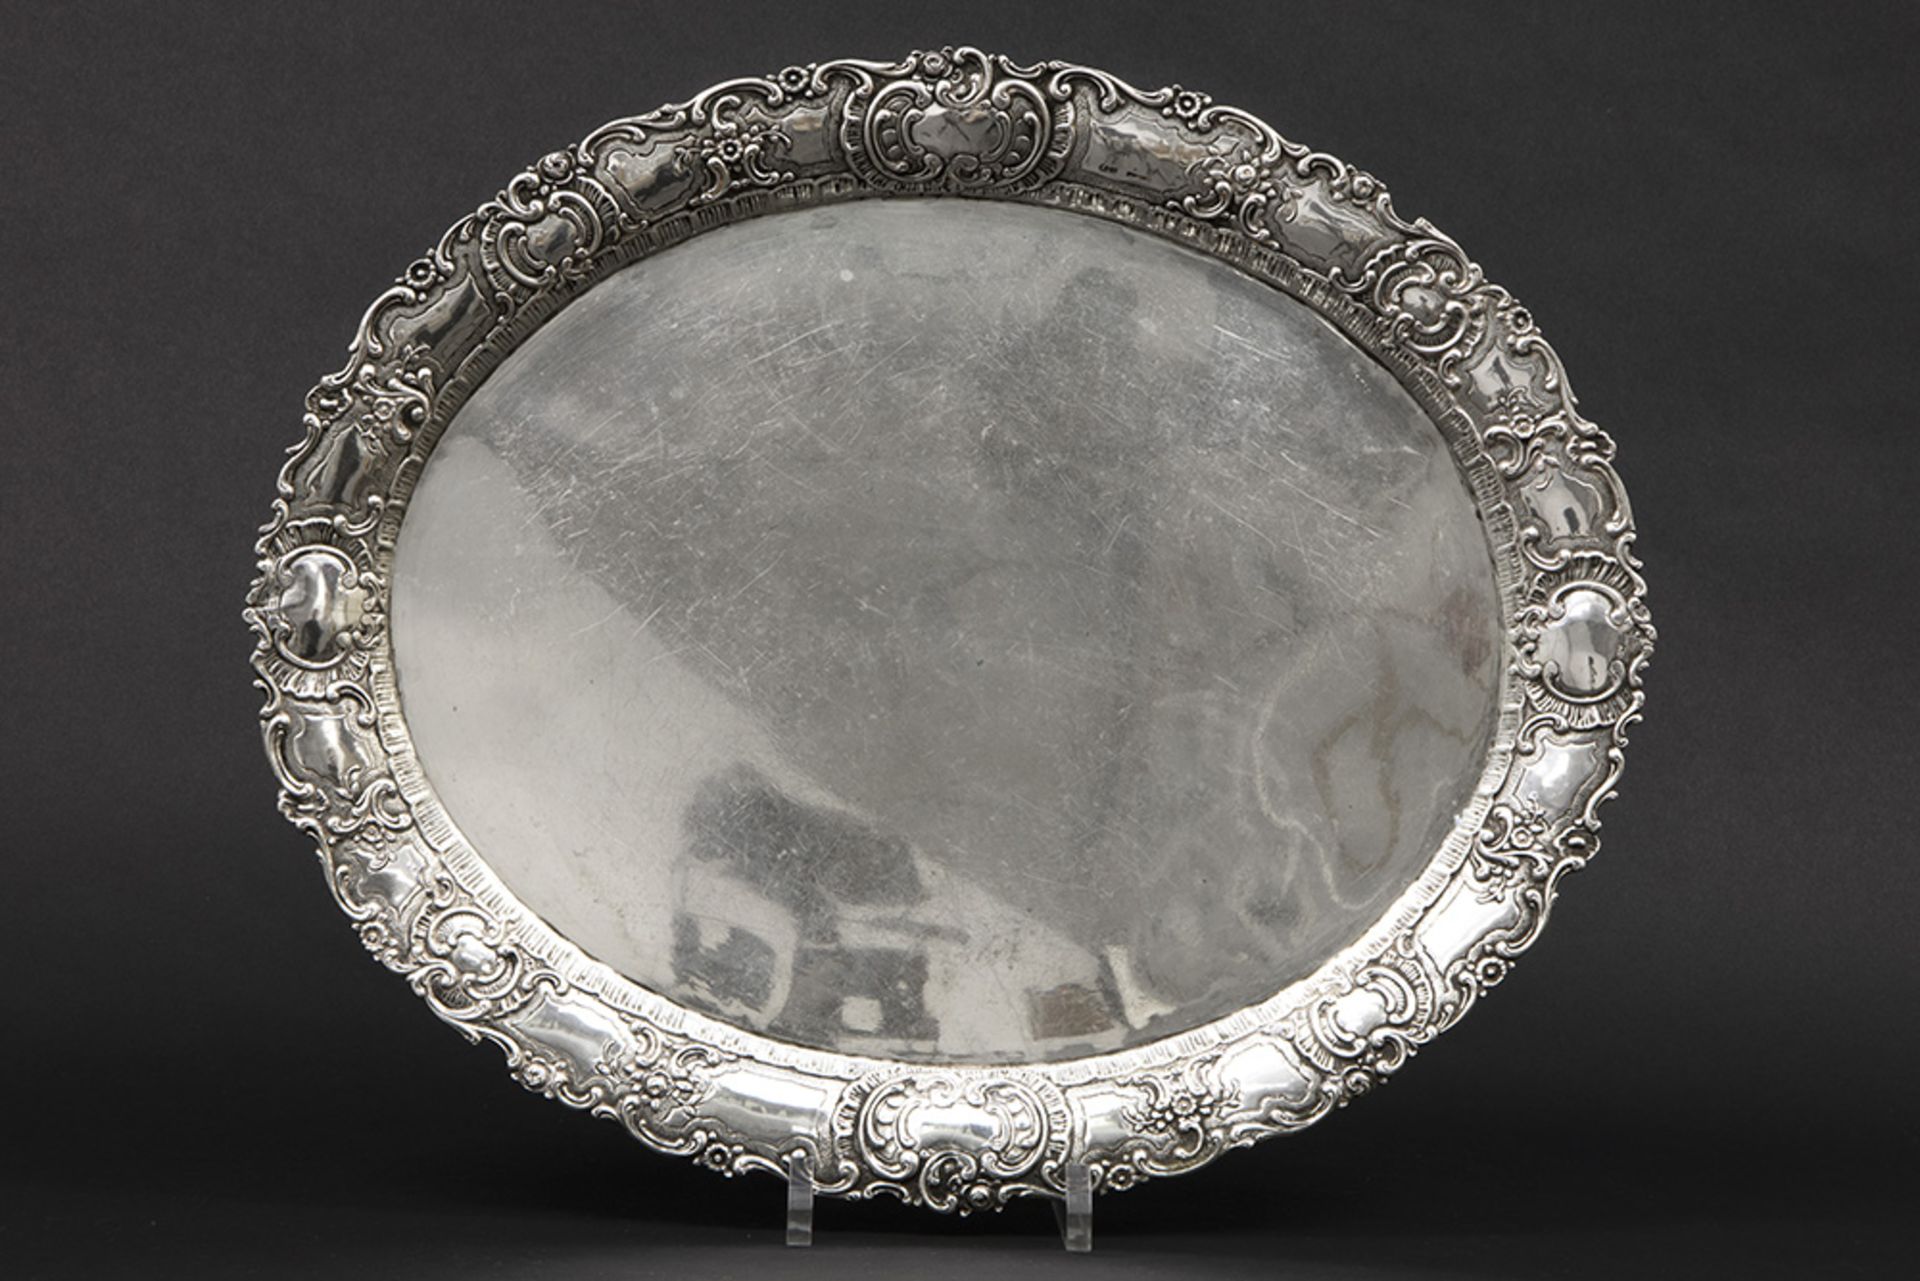 oval serving tray in German 800 marked silver || Antieke ovale dienschaal in massief zilver, gemerkt